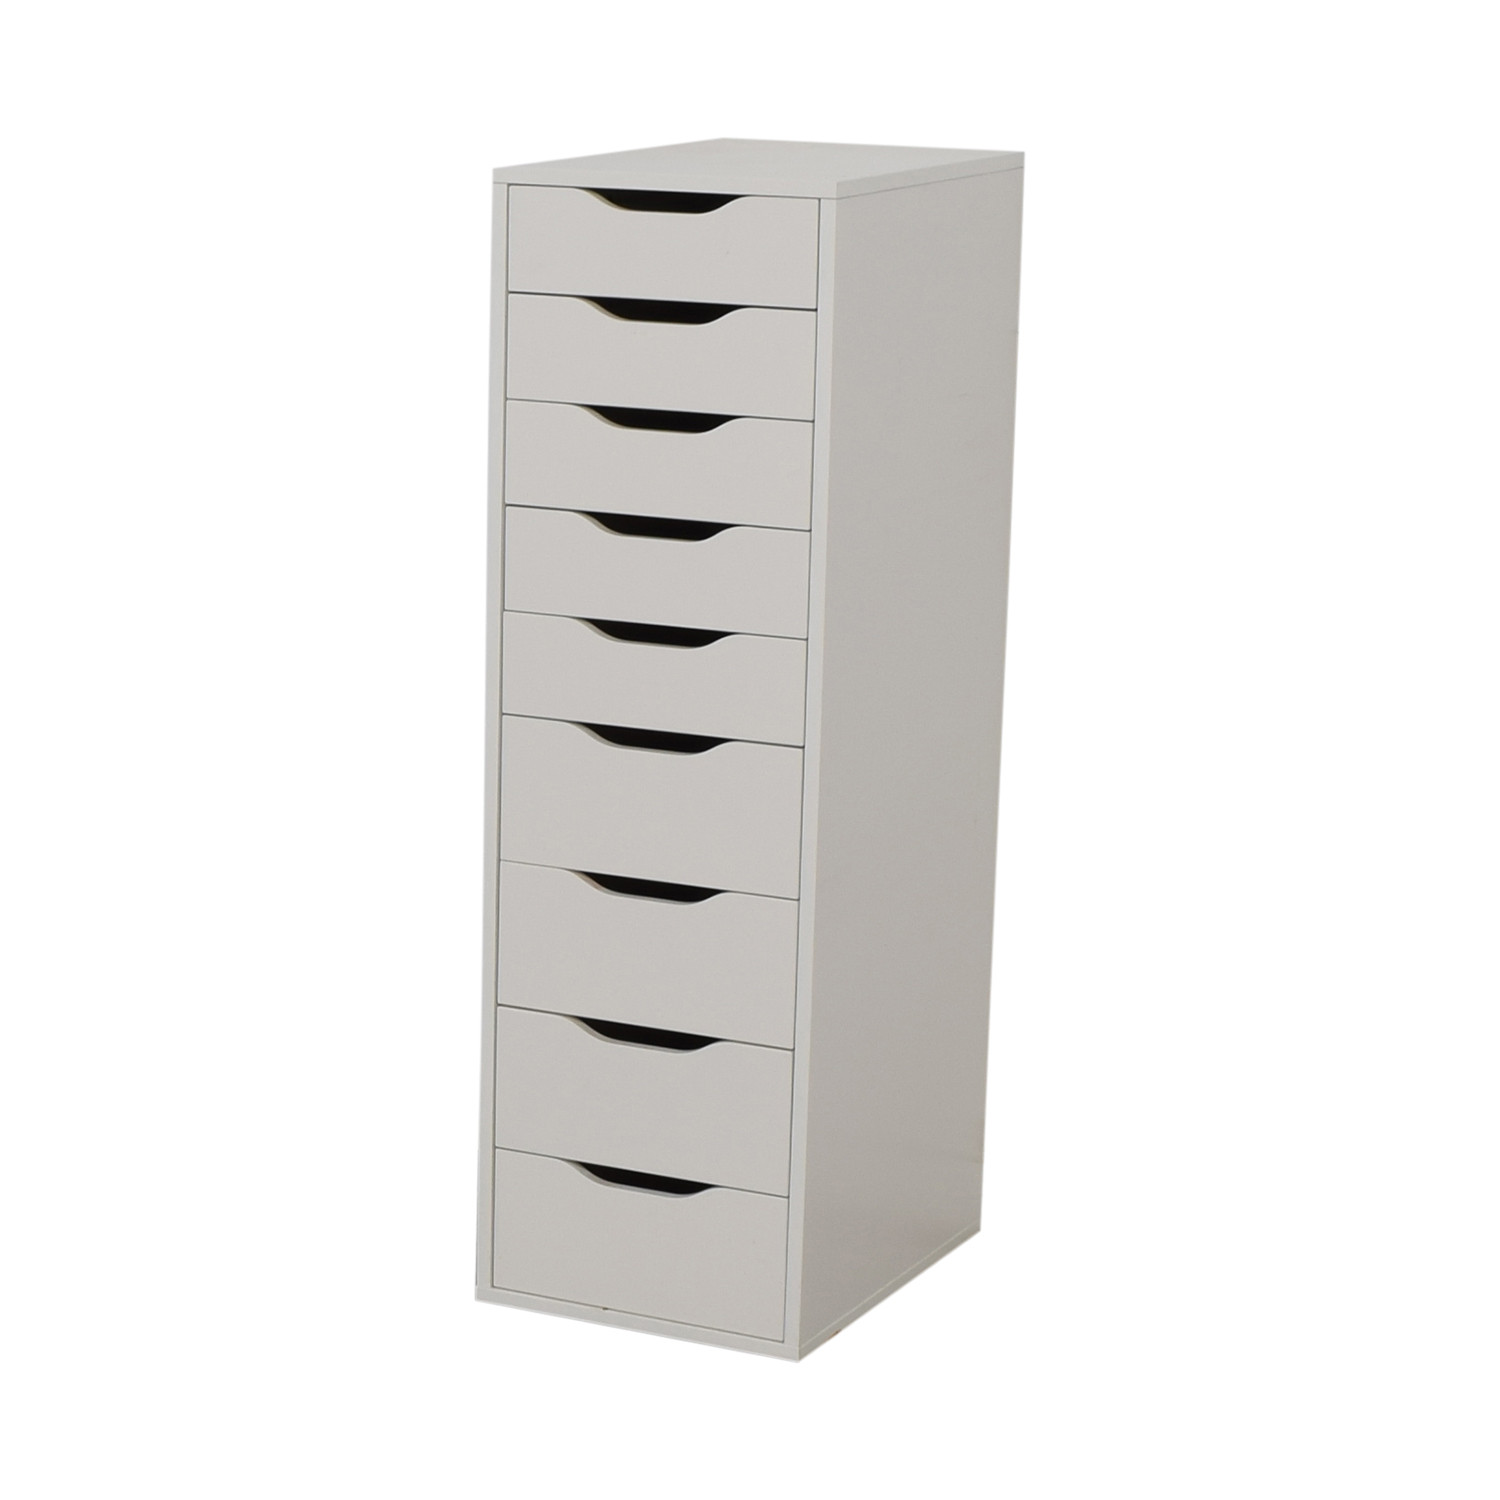 Ikea Tall Kitchen Cabinet
 OFF IKEA IKEA White Nine Drawer Tall File Cabinet